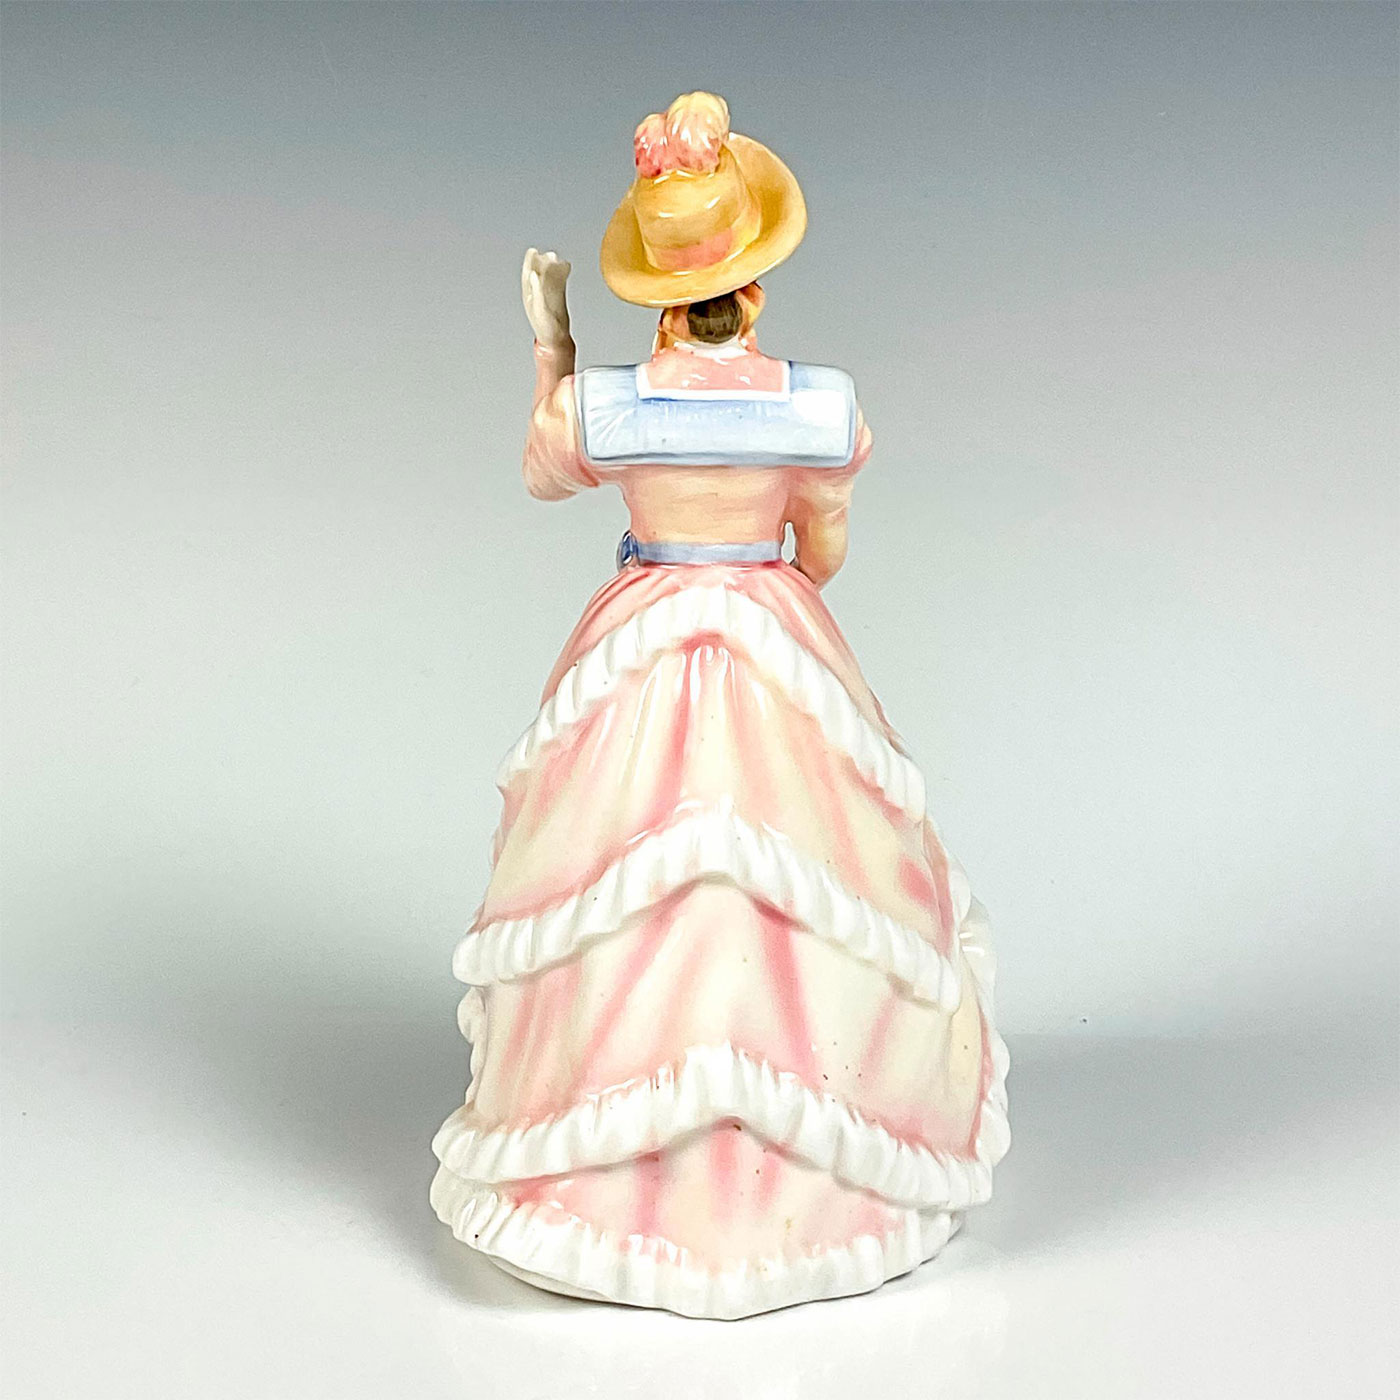 Sharon HN3603 - Royal Doulton Figurine - Image 2 of 3